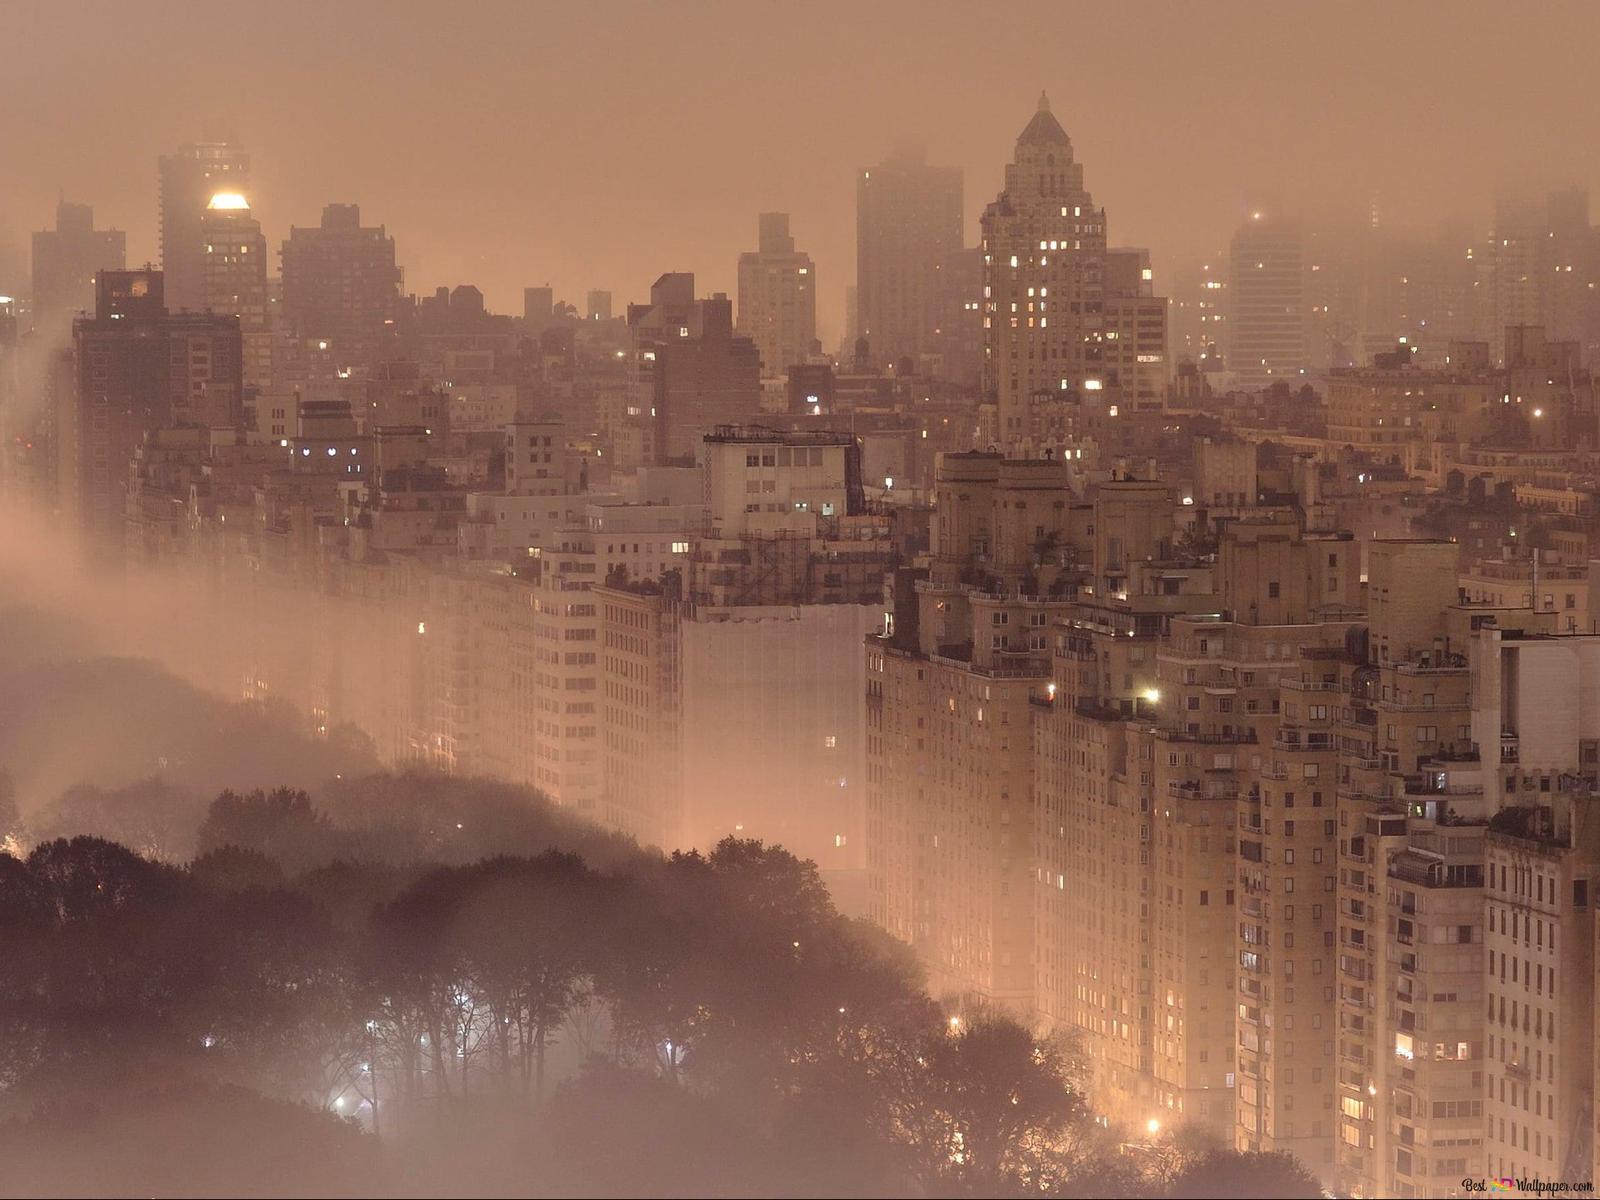 A city skyline with fog in the air - New York